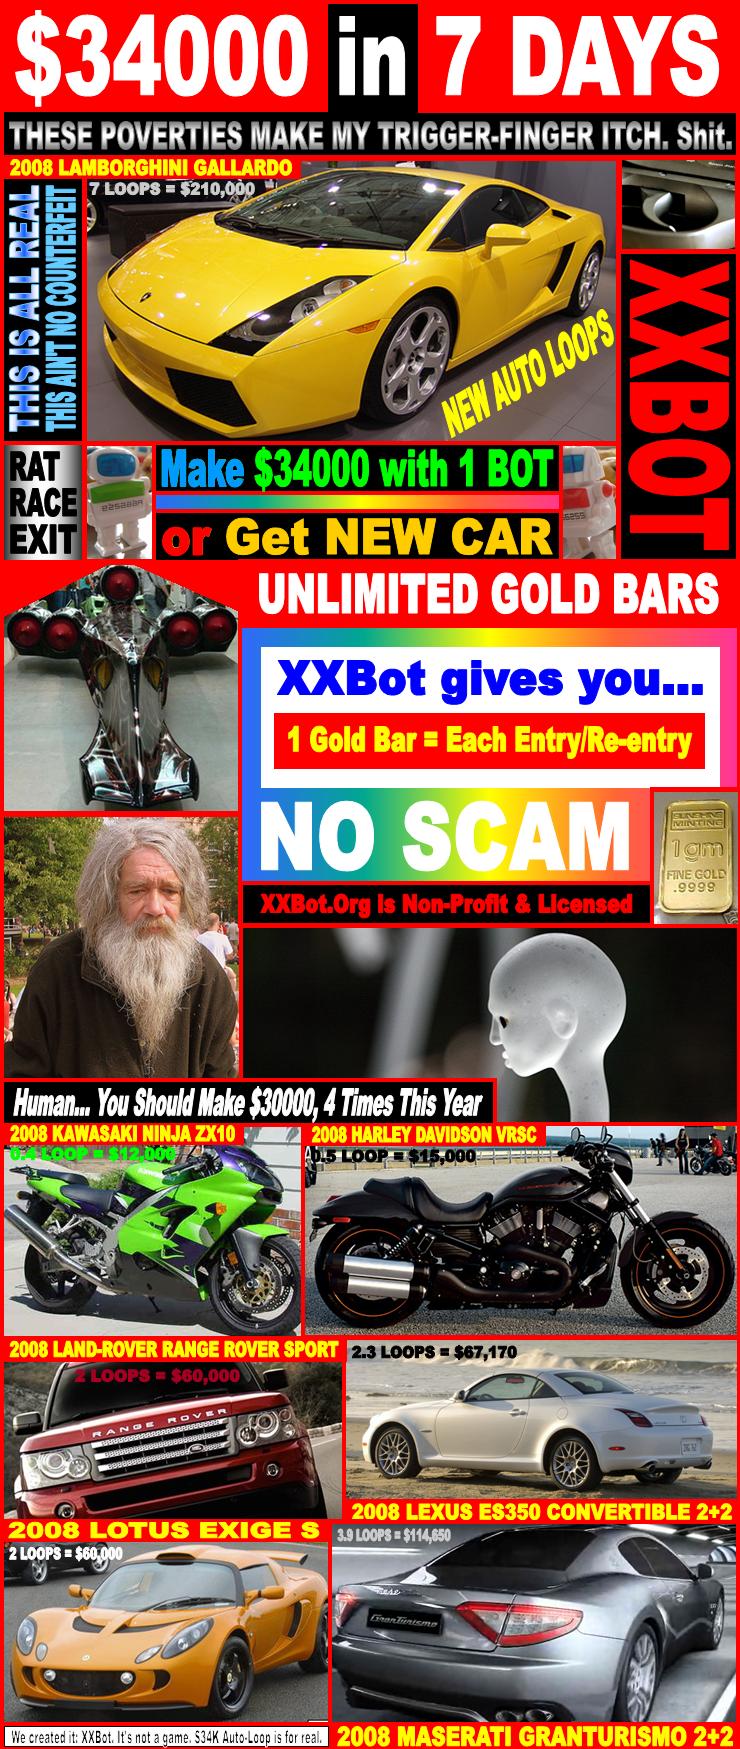 no-scams---human-you-should-make-30000dollars-4tim